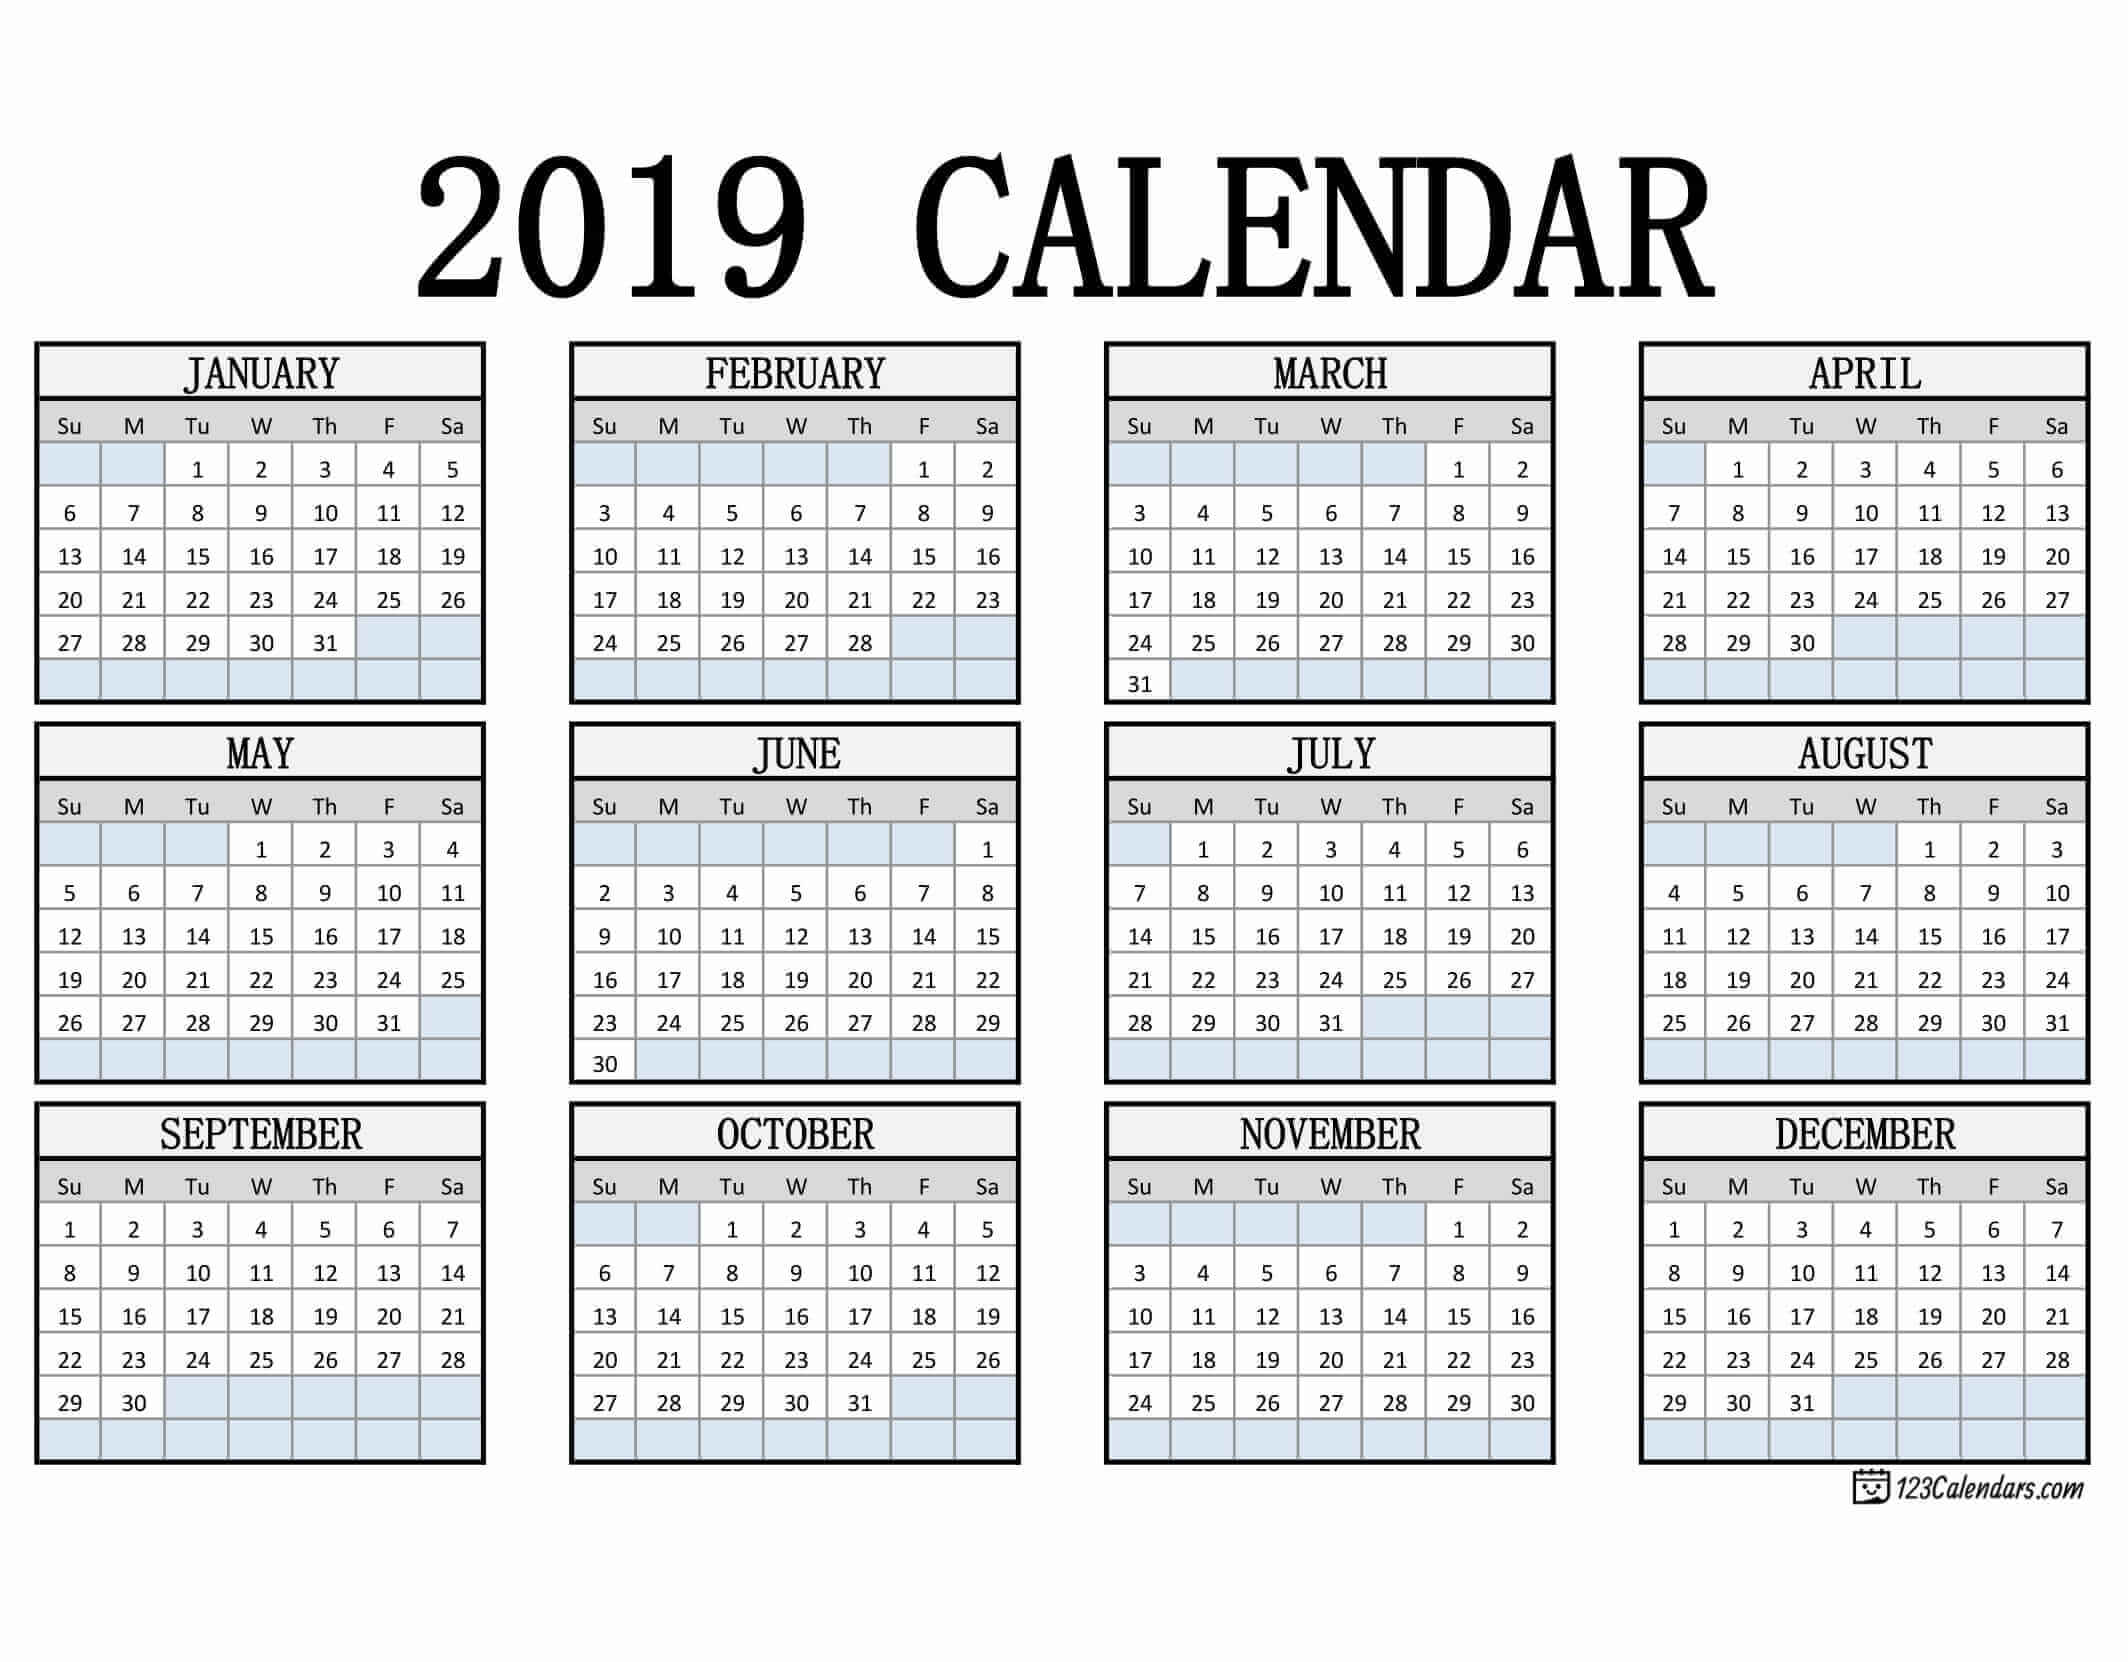 2019 Calendar Printable WinCalendar